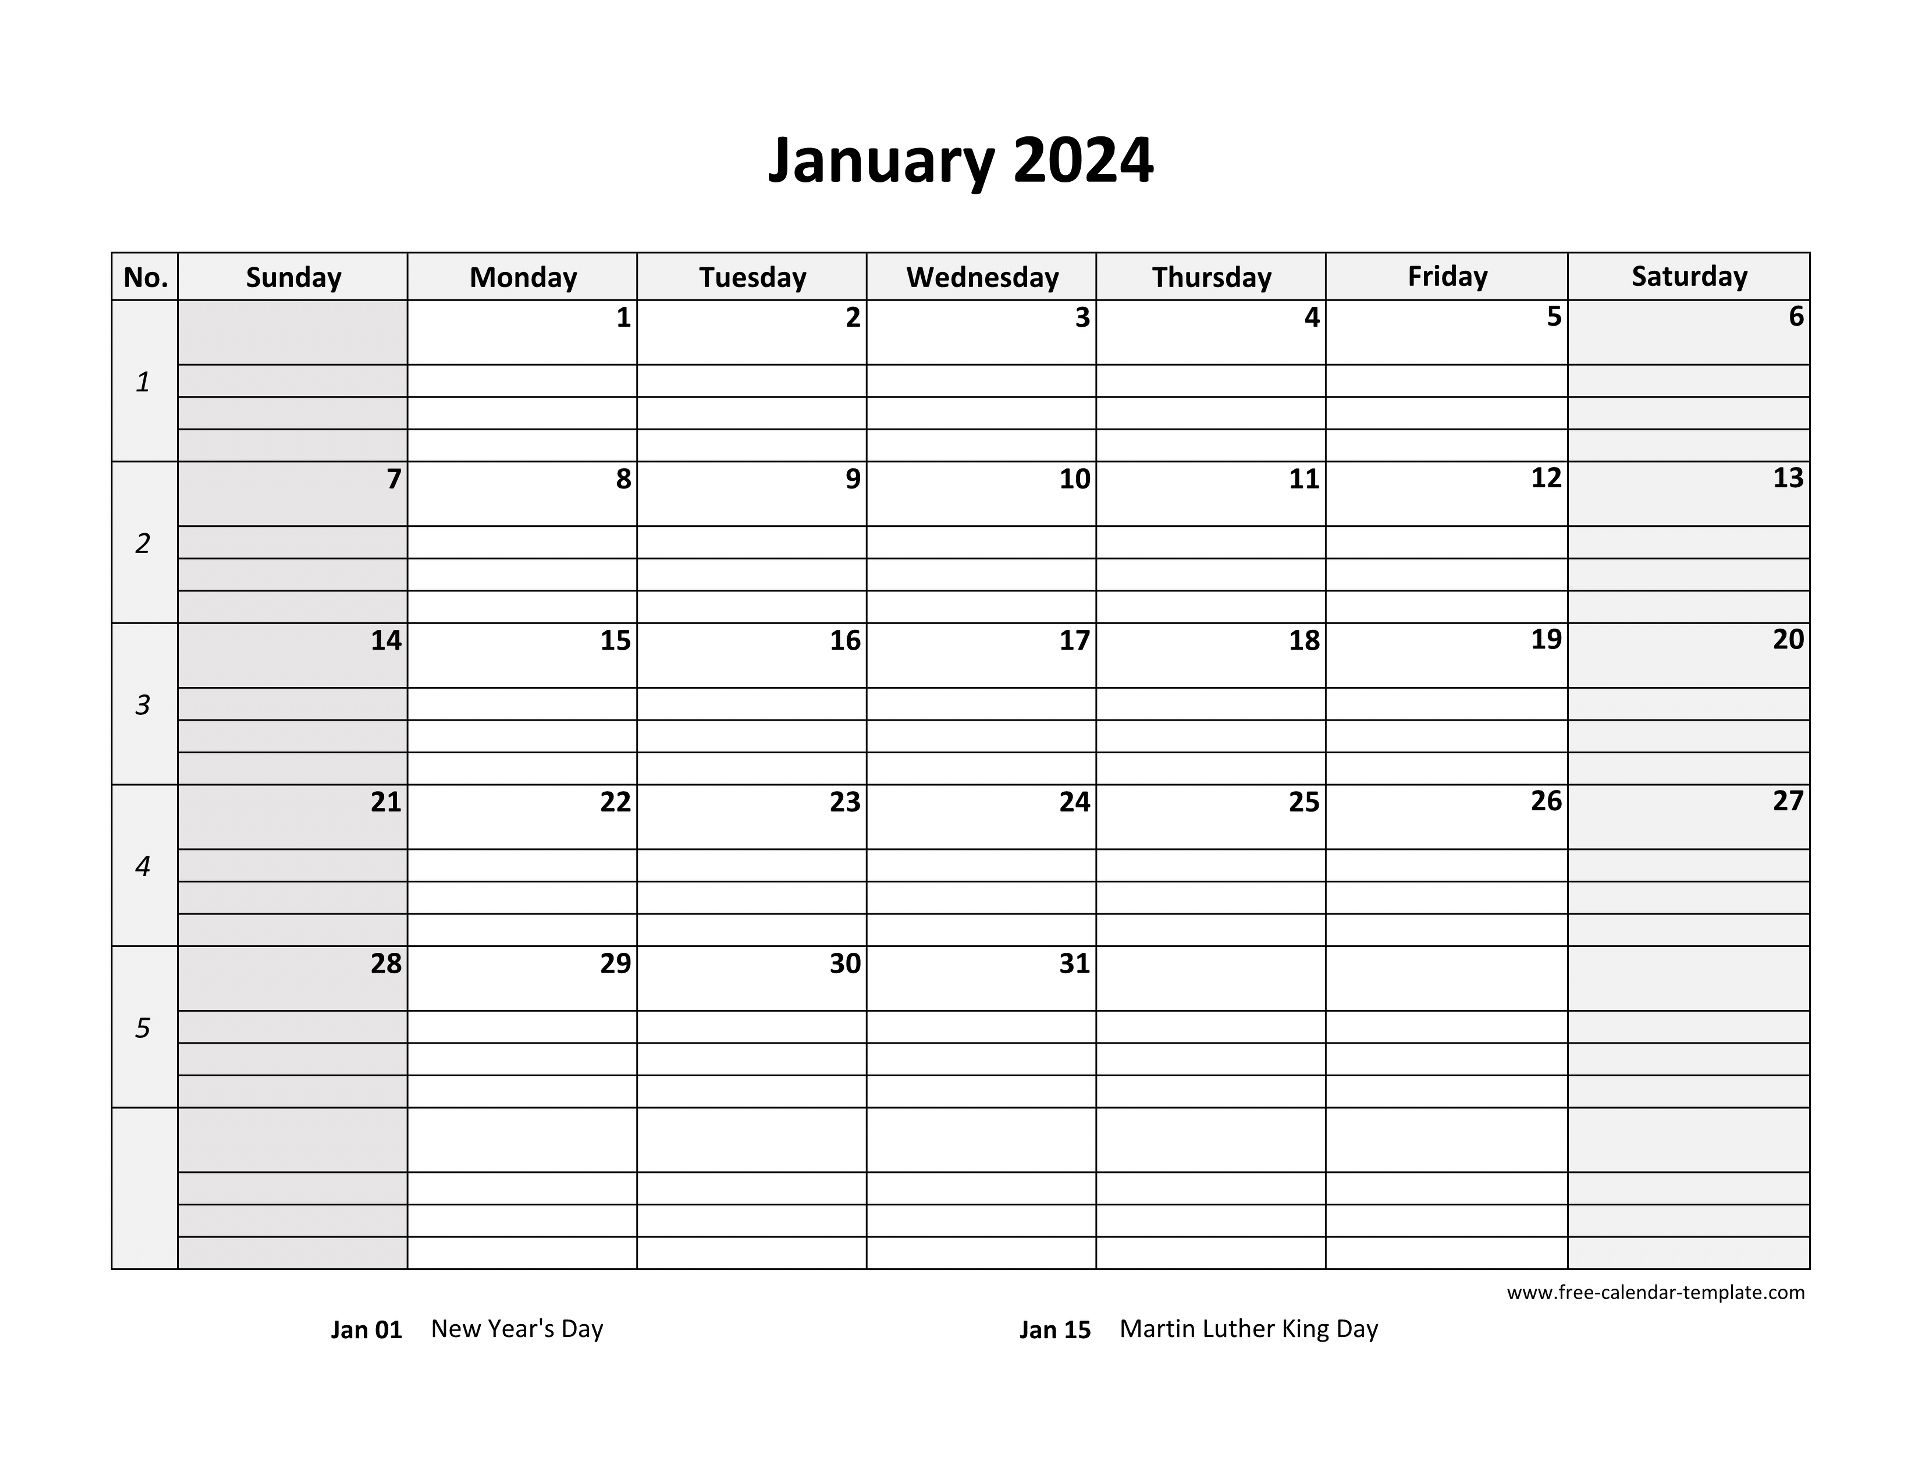 January 2024 Calendar Free Printable With Grid Lines Designed for Printable January 2024 Calendar With Lines